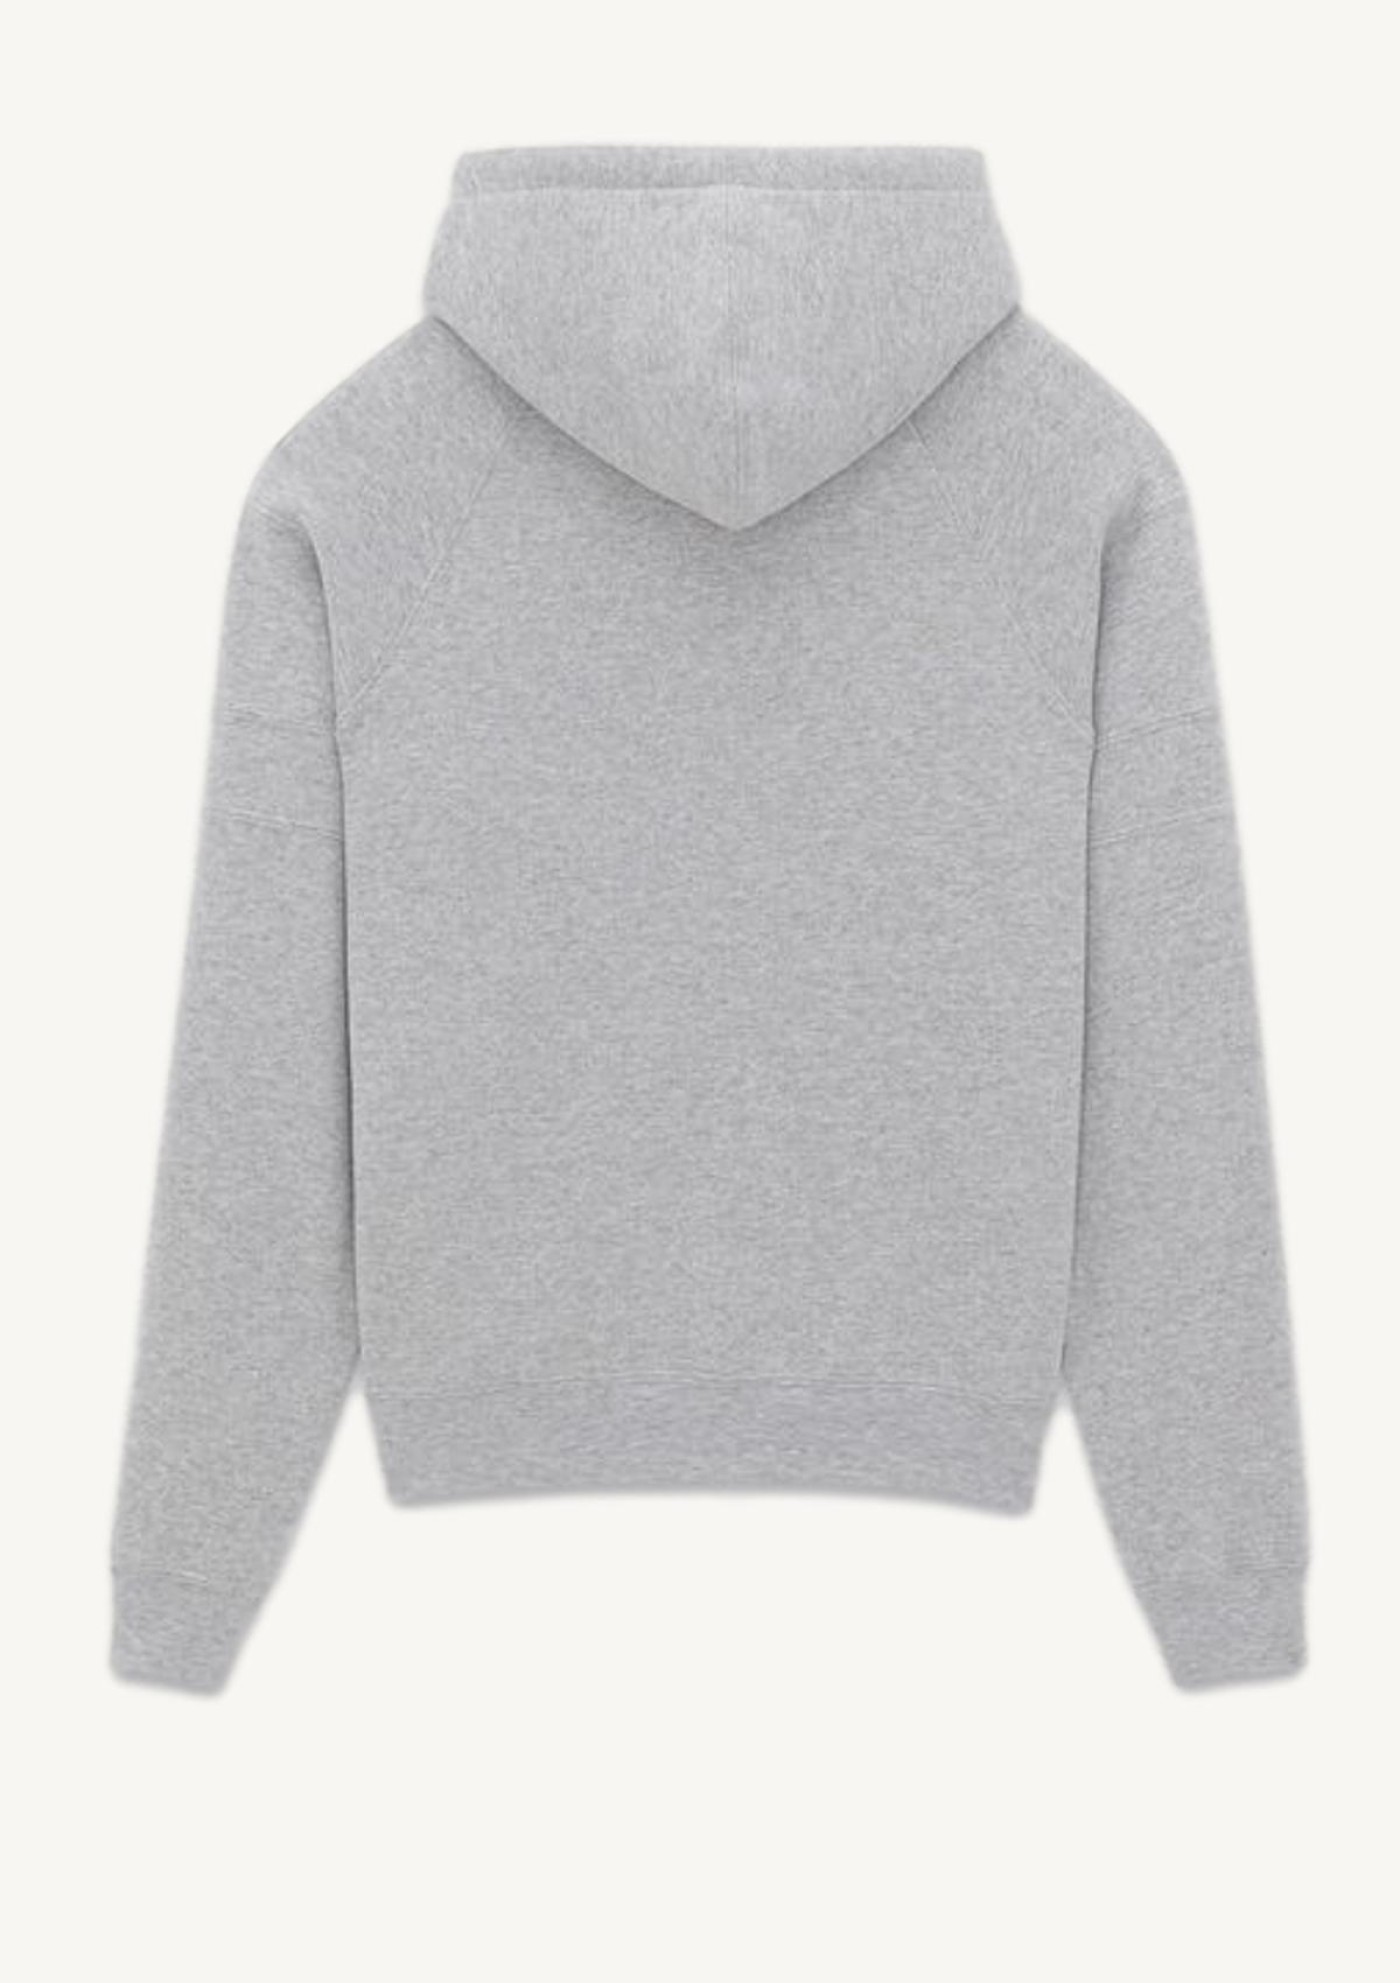 Saint Laurent grey embroidered hoodie